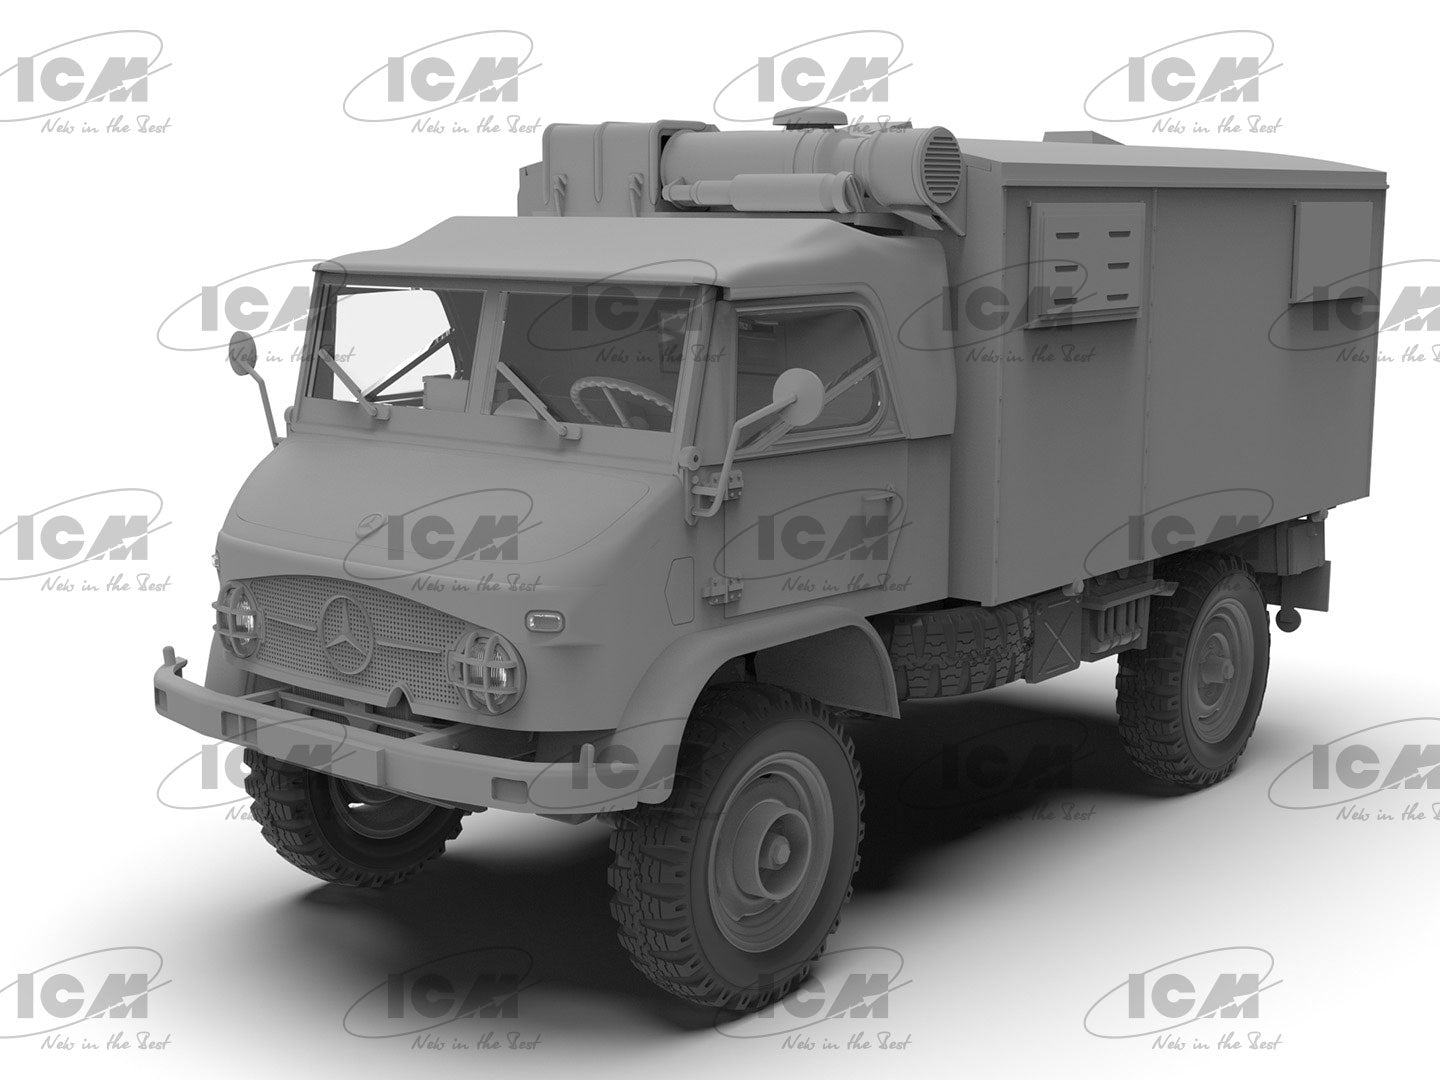 ICM 1/35th scale Unimog S 404 with Box Body